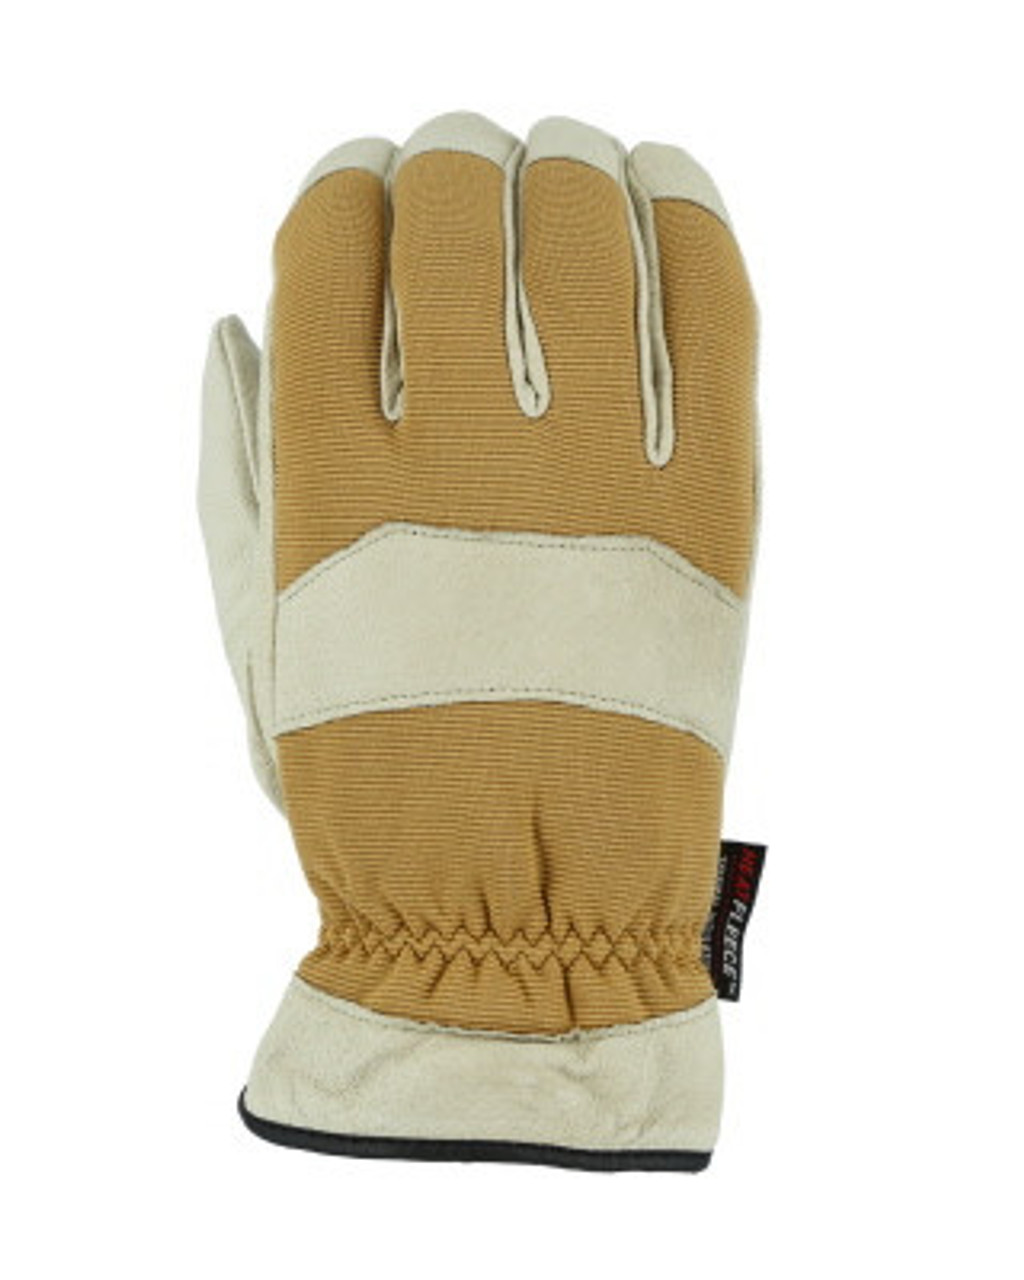 MAJESTIC GLOVE 1572 Fleece Lined Top Grain Pigskin Work Gloves - Insulated Glove